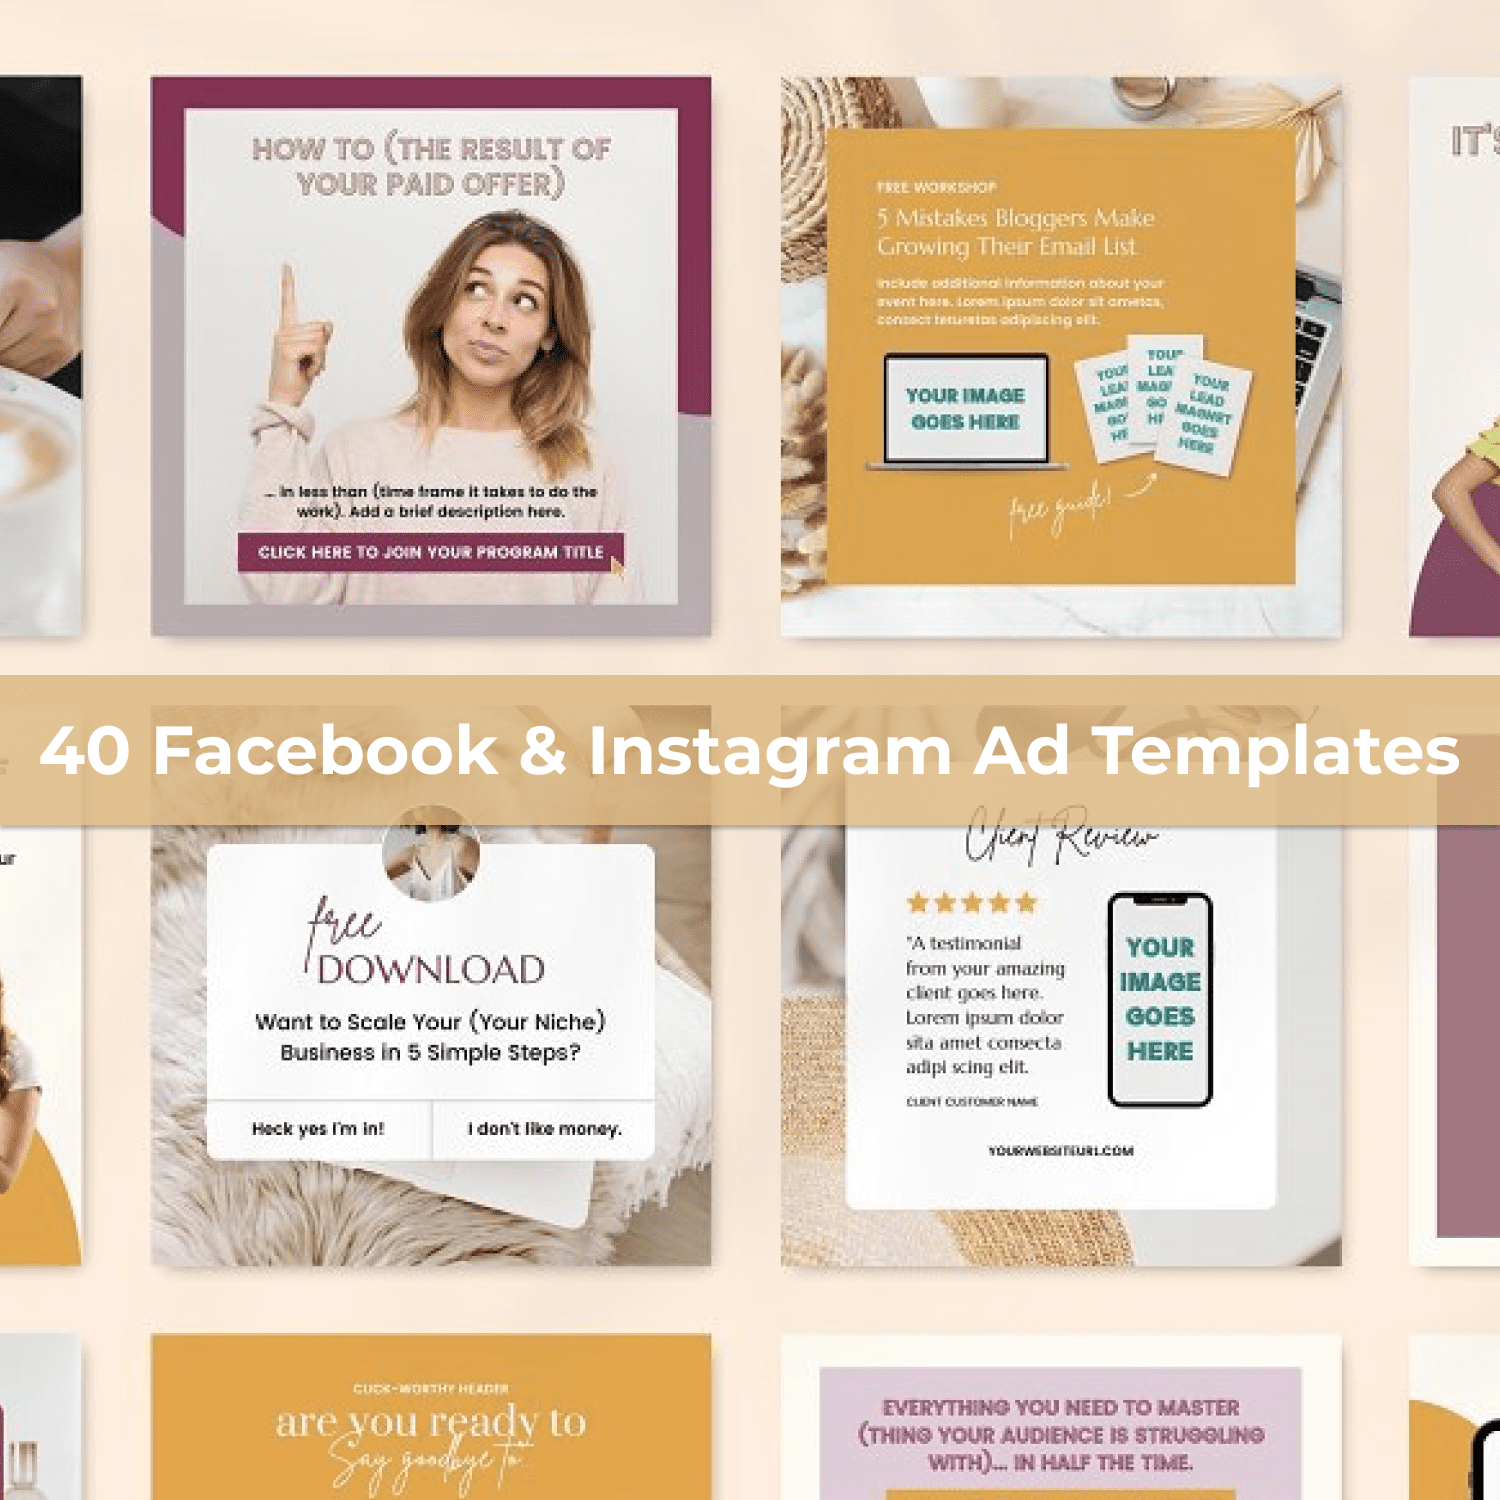 40 Facebook & Instagram Ad Templates cover image.